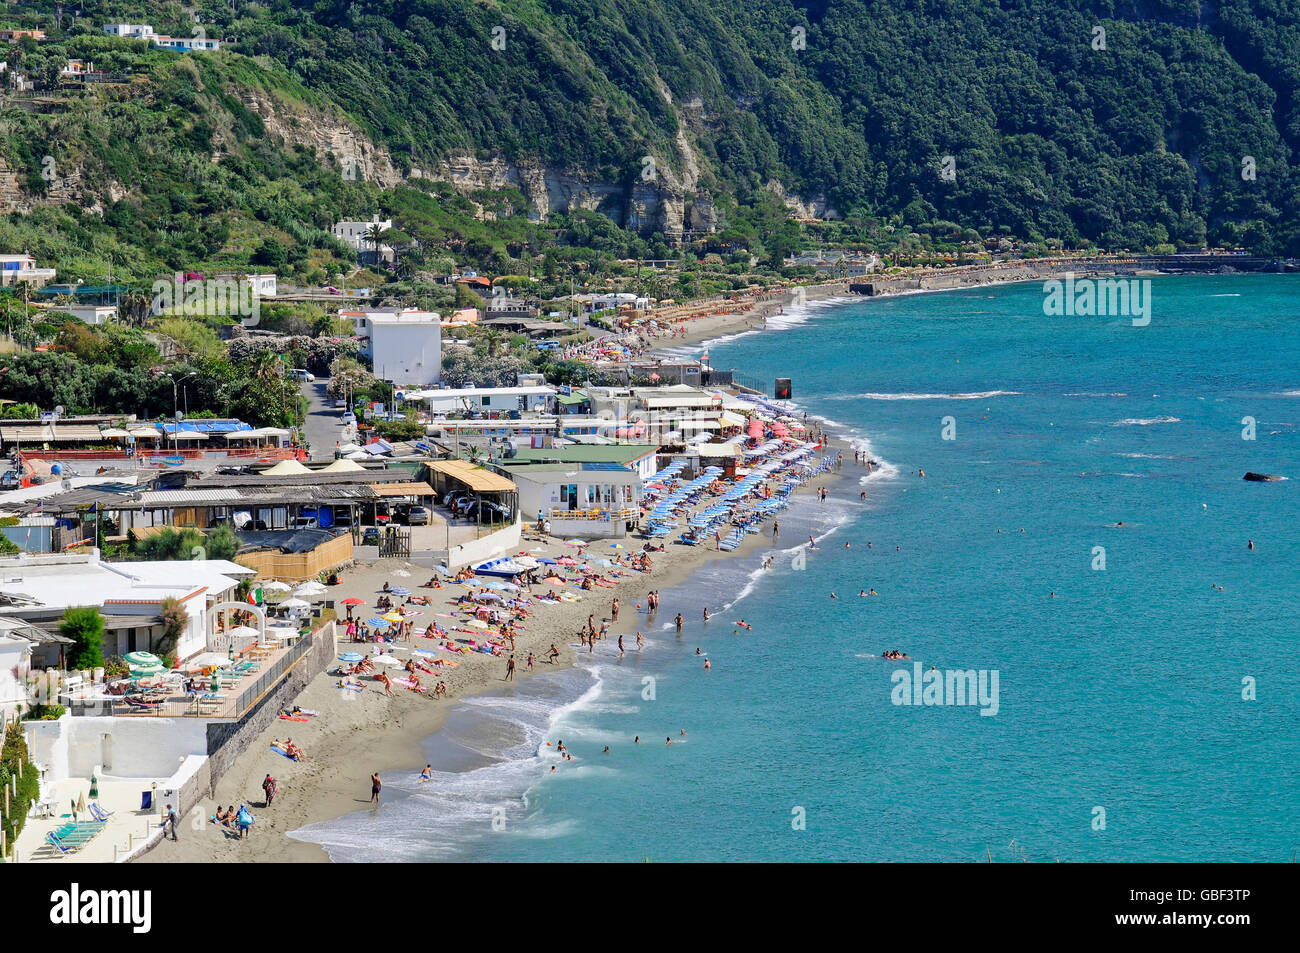 Citara, beach, Forio, Island of Ischia, Gulf of Naples, Campania, Italy  Stock Photo - Alamy